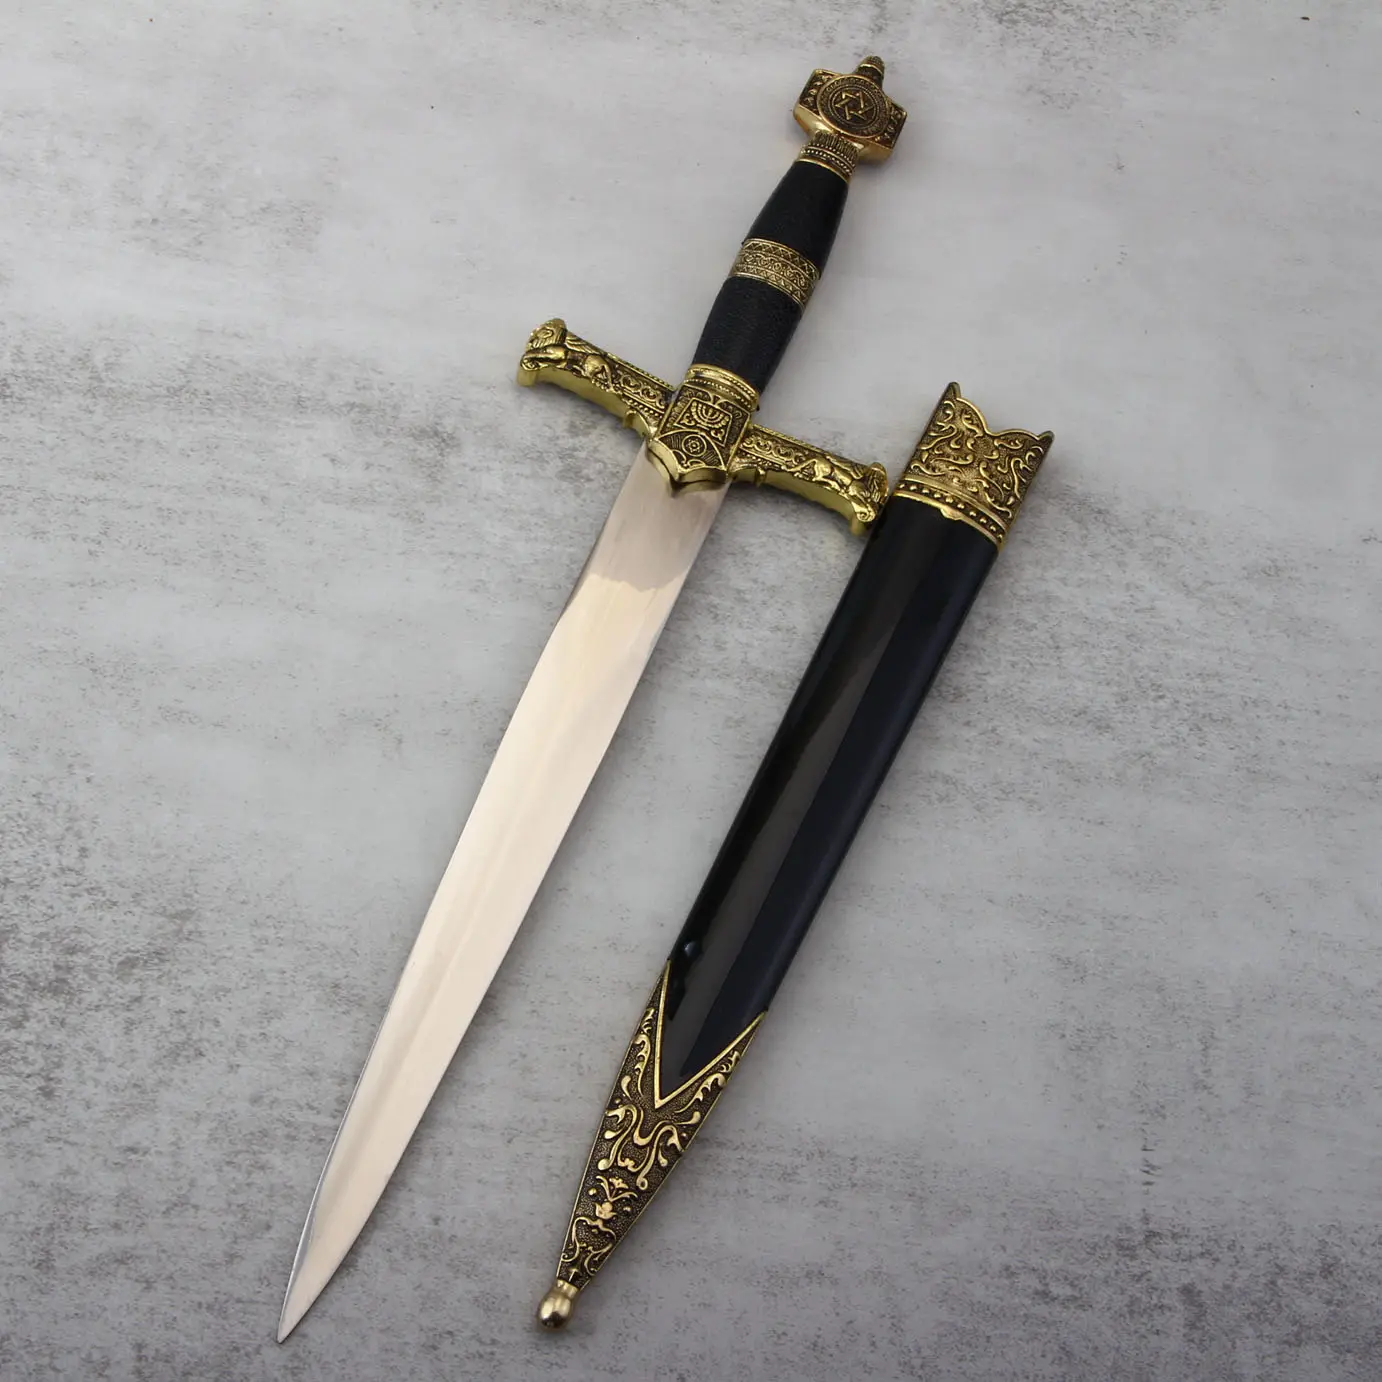 Espada en miniatura de Color dorado para decoración, exquisita espada en miniatura de estilo masónico